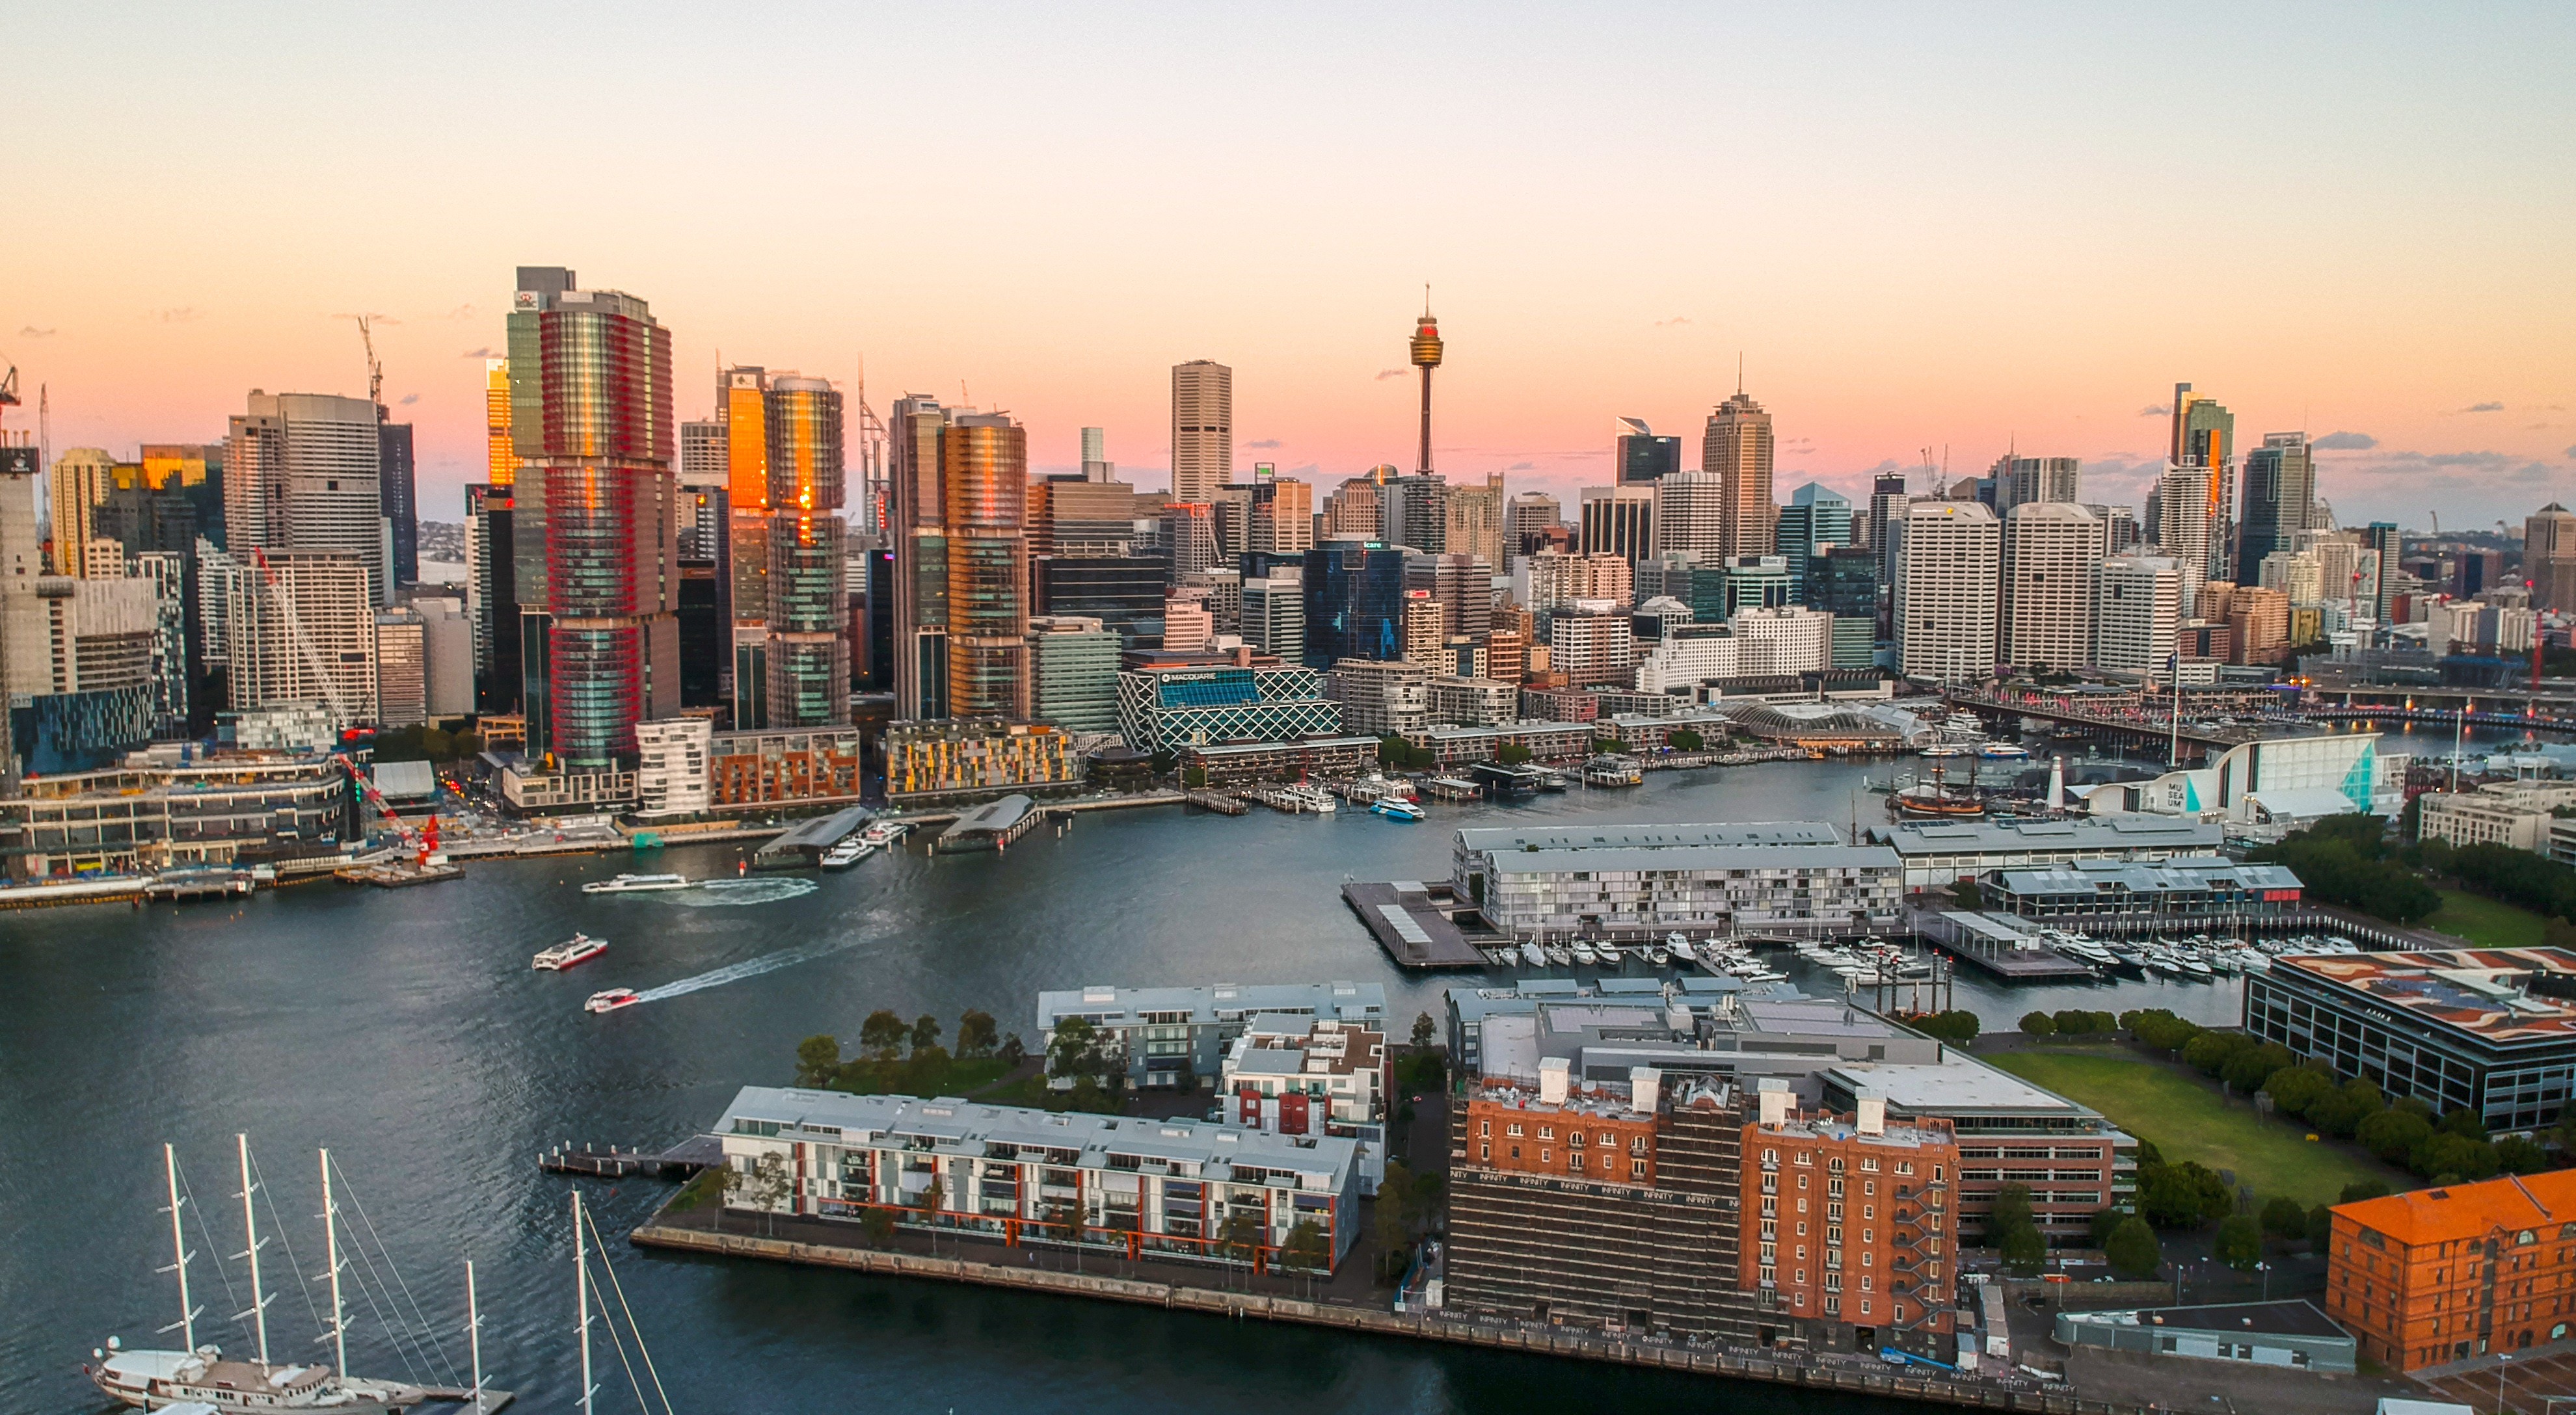 2019-04-10_Sydney_CBD_view_from_Pyrmont_at_sunset.jpg